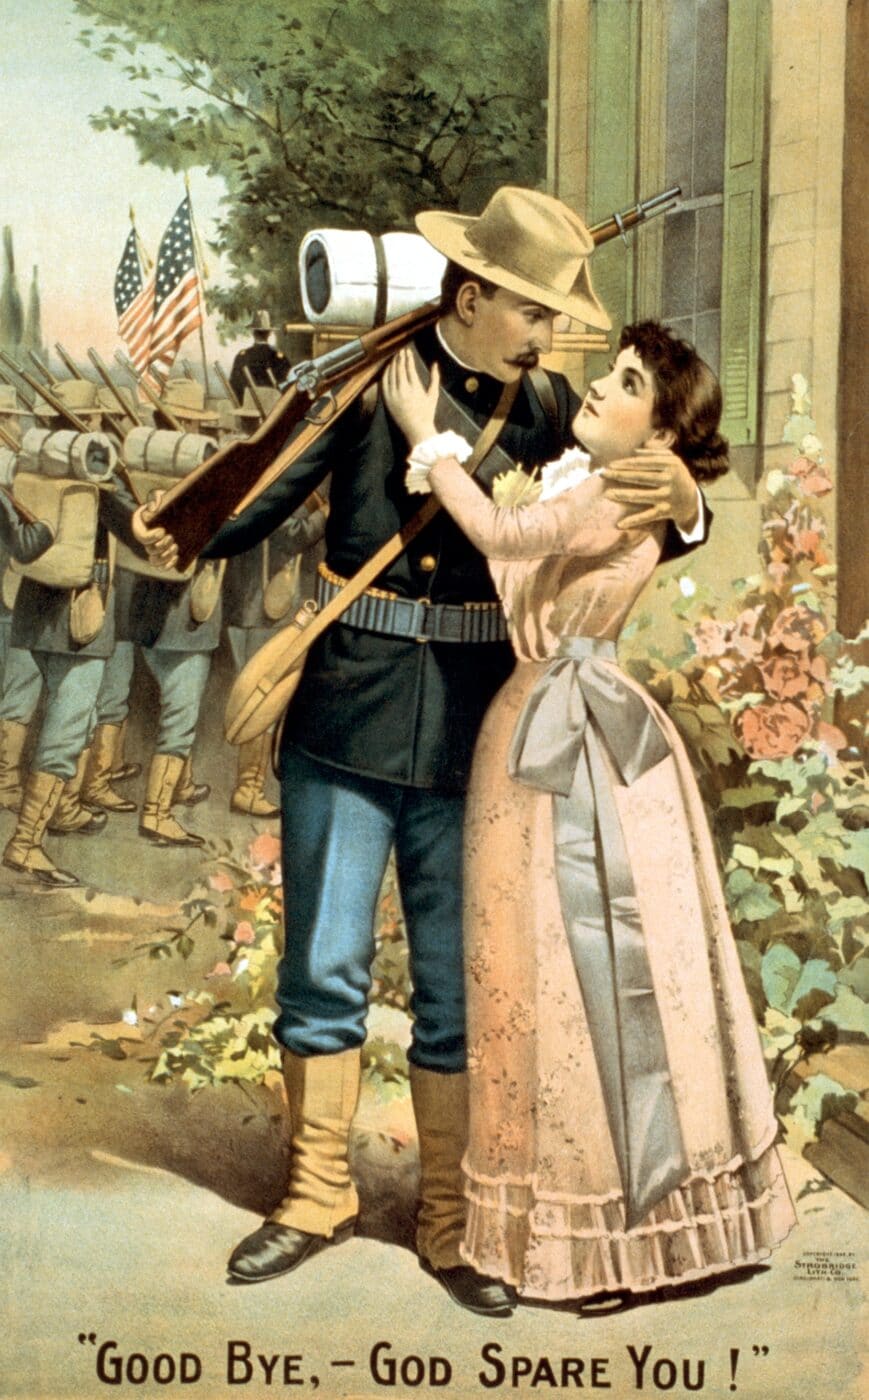 Spanish-American War postcard featuring Krag Jorg rifle